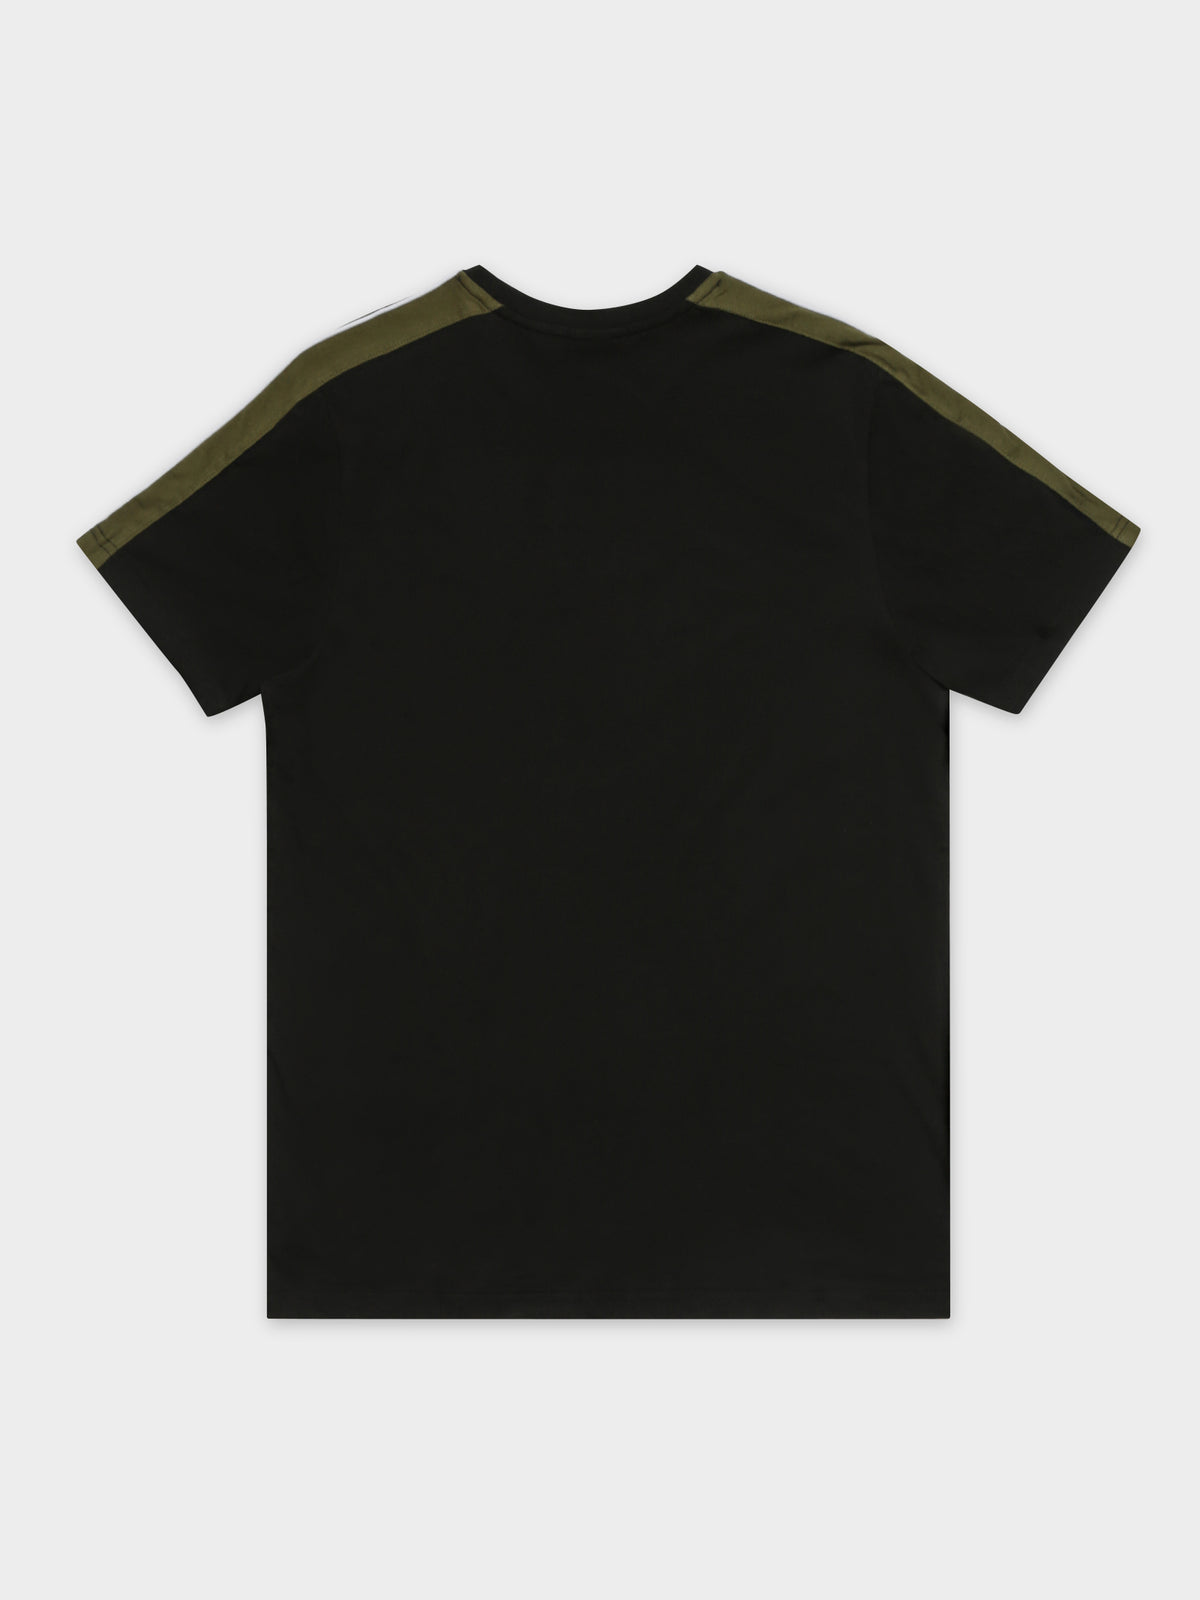 Carcano T-Shirt in Black &amp; Green